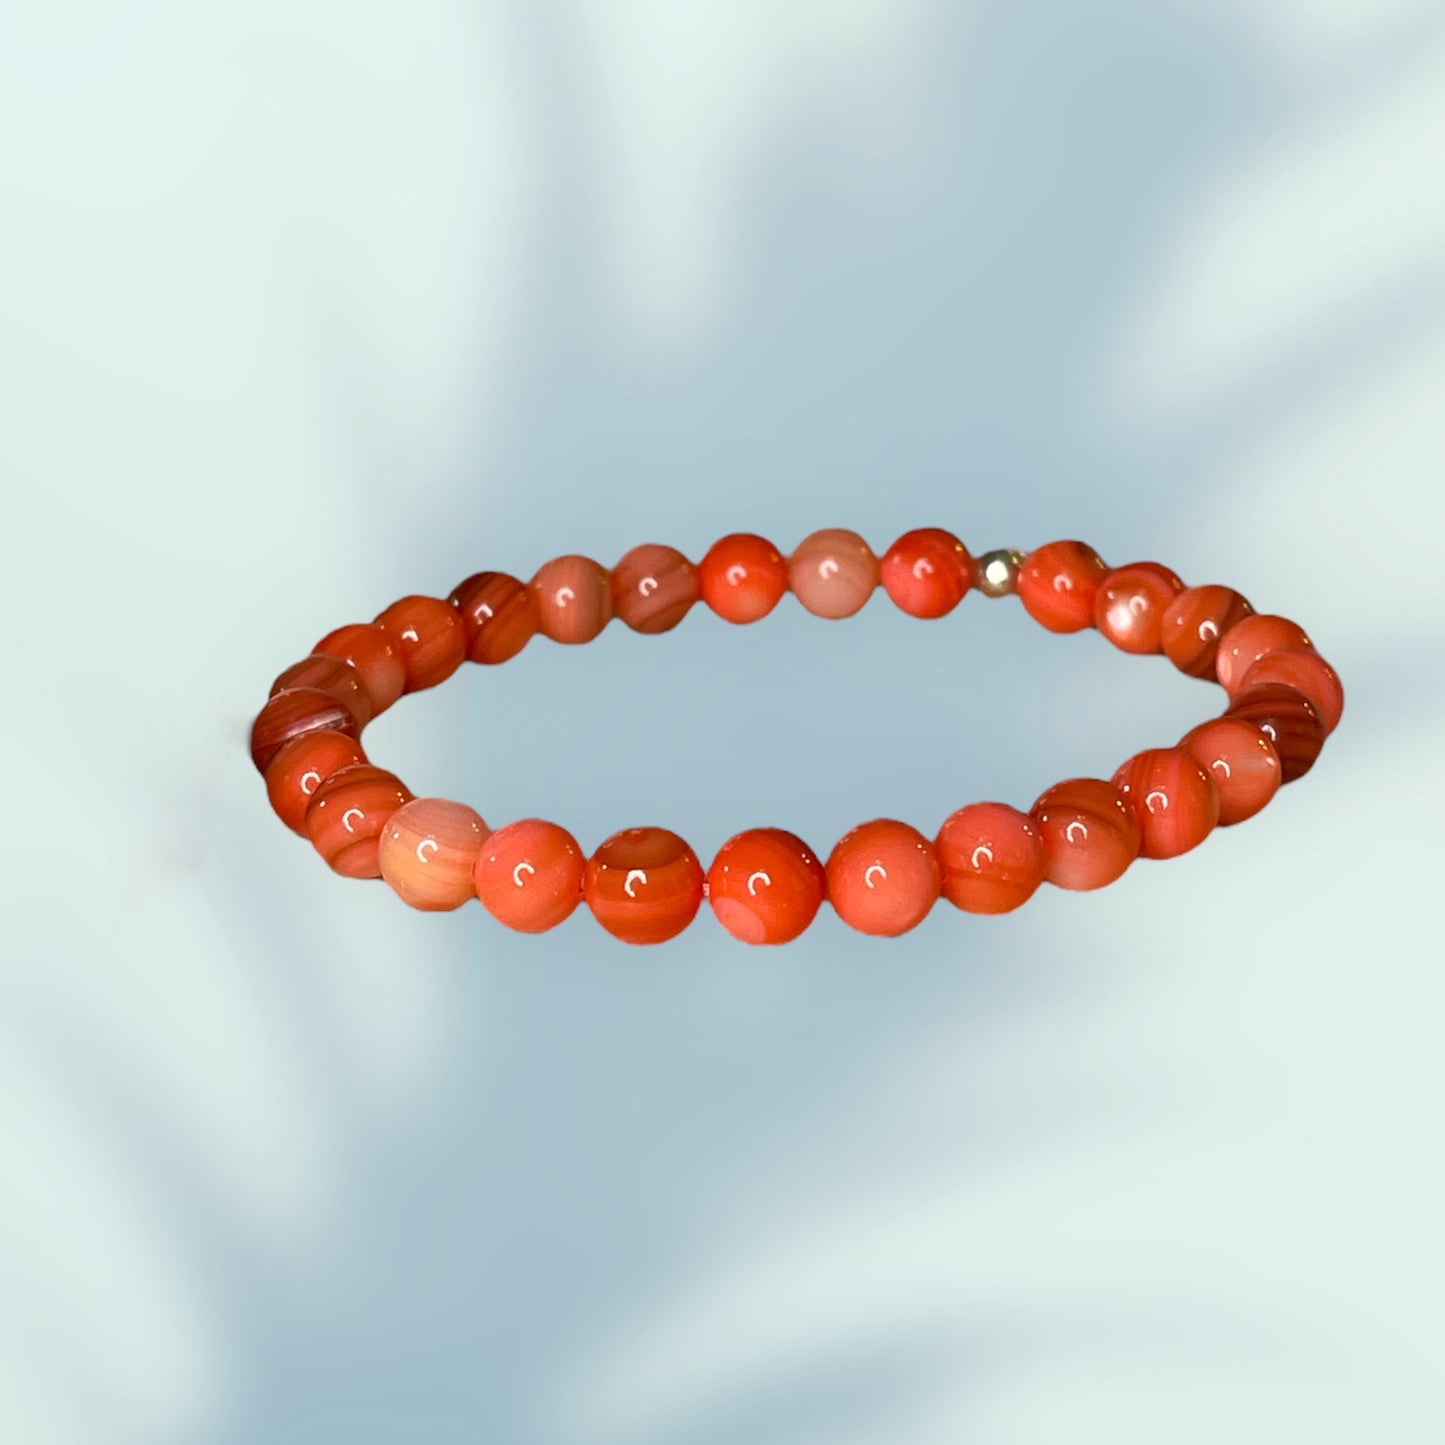 Orange/peach calcite bead bracelet with multiple shades of color